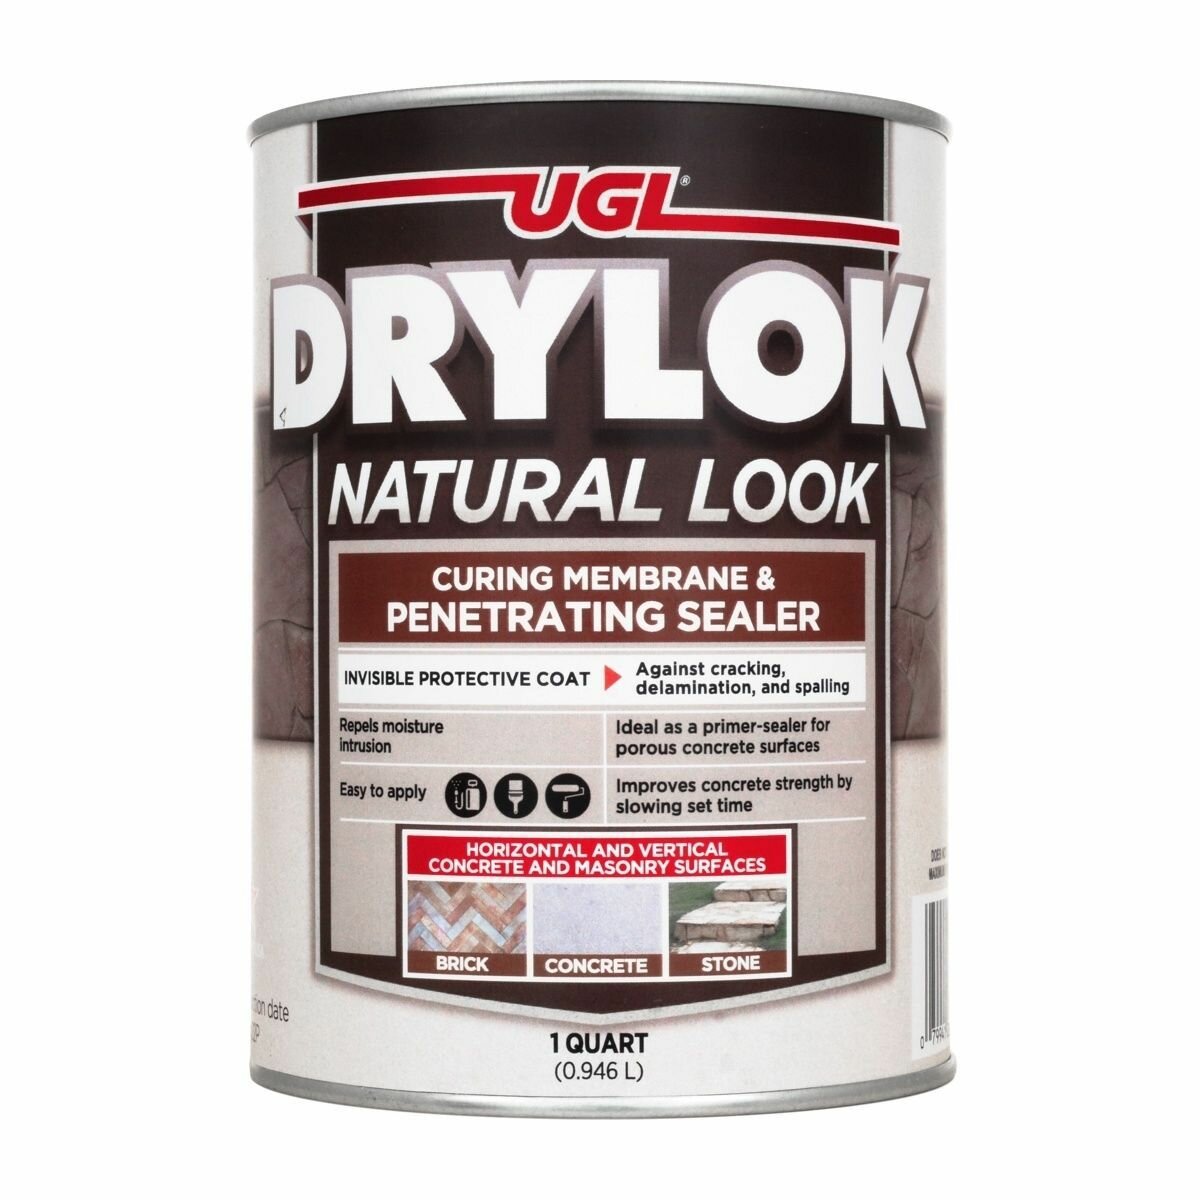 Drylok Natural Look Sealer 946мл акриловая защитно-декоративная пропитка для камня, бетона, кирпича, сланца